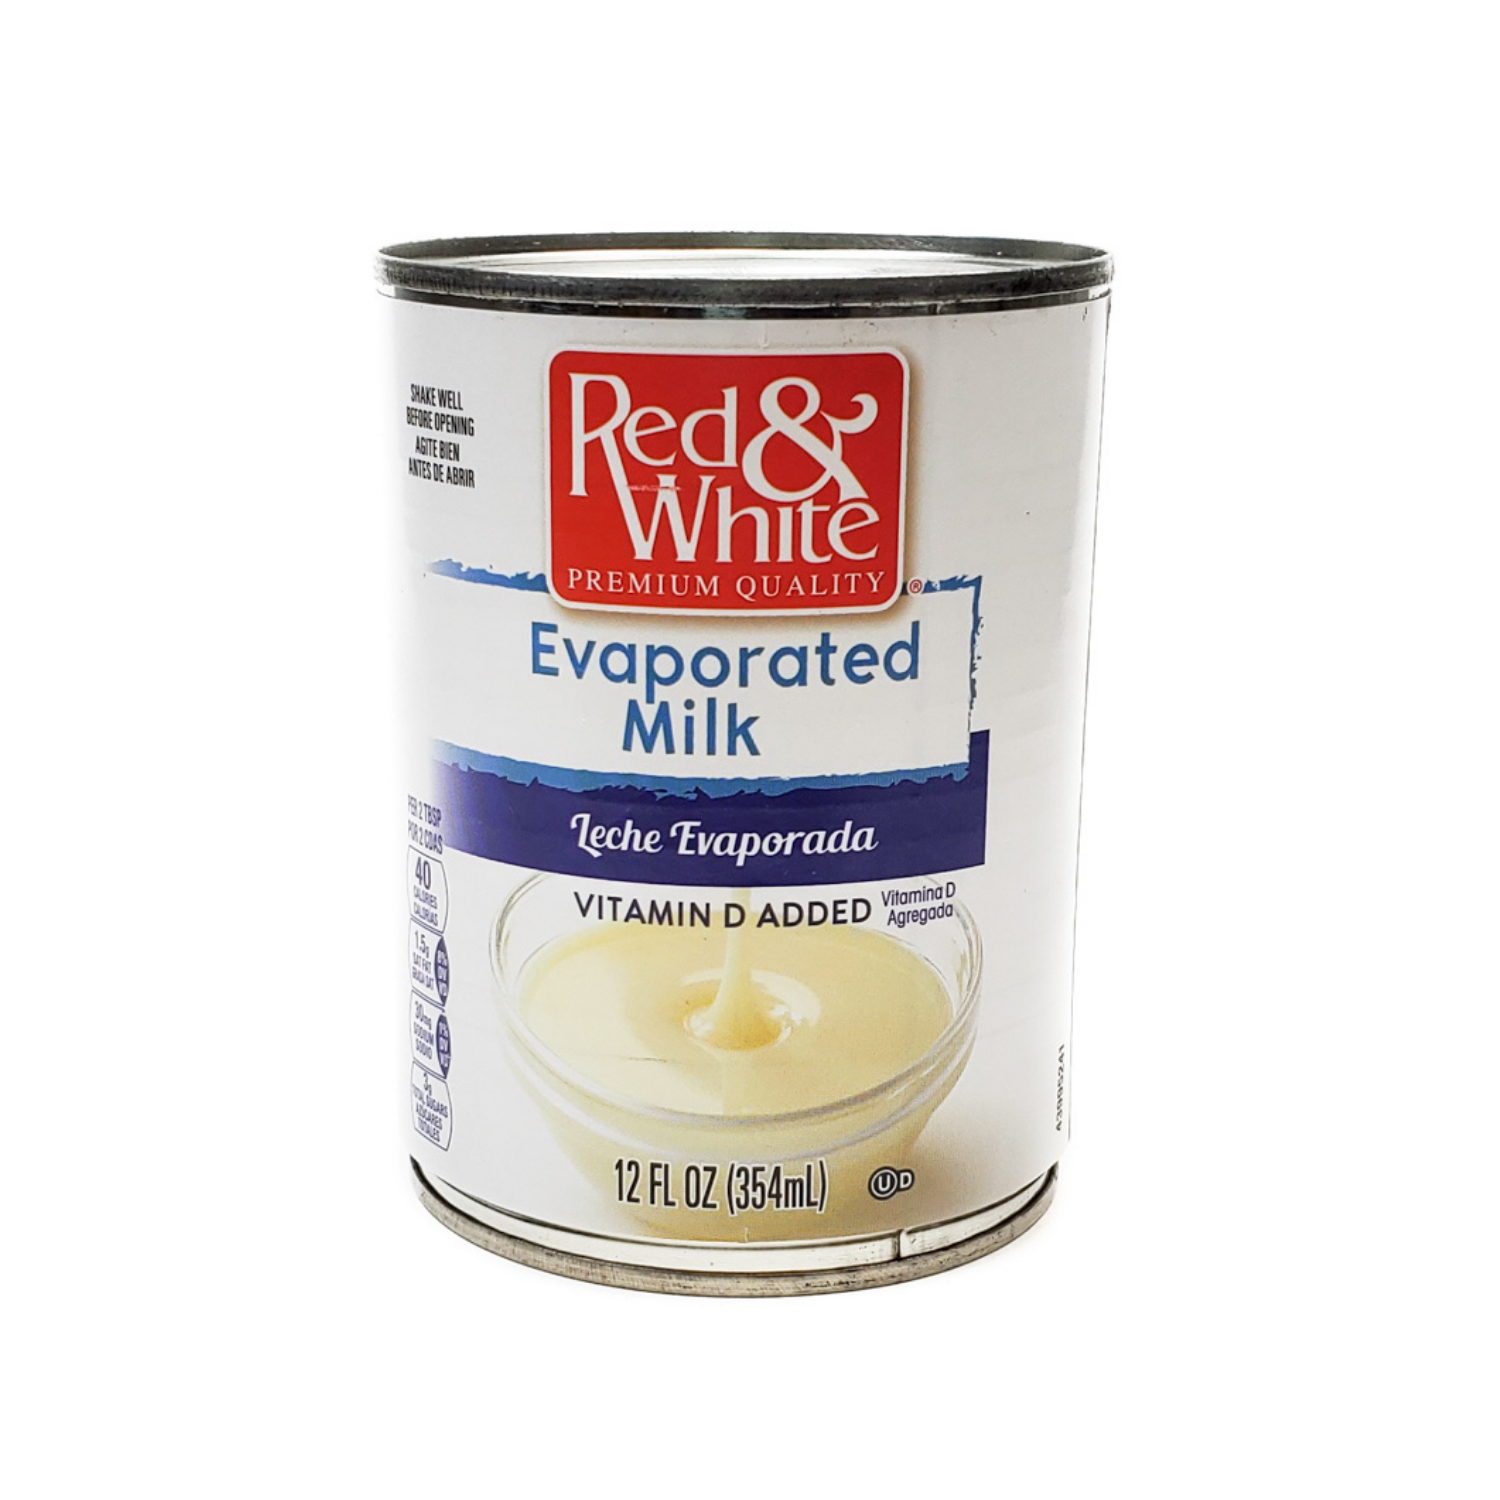 Red&white Evaported Milk 354ml